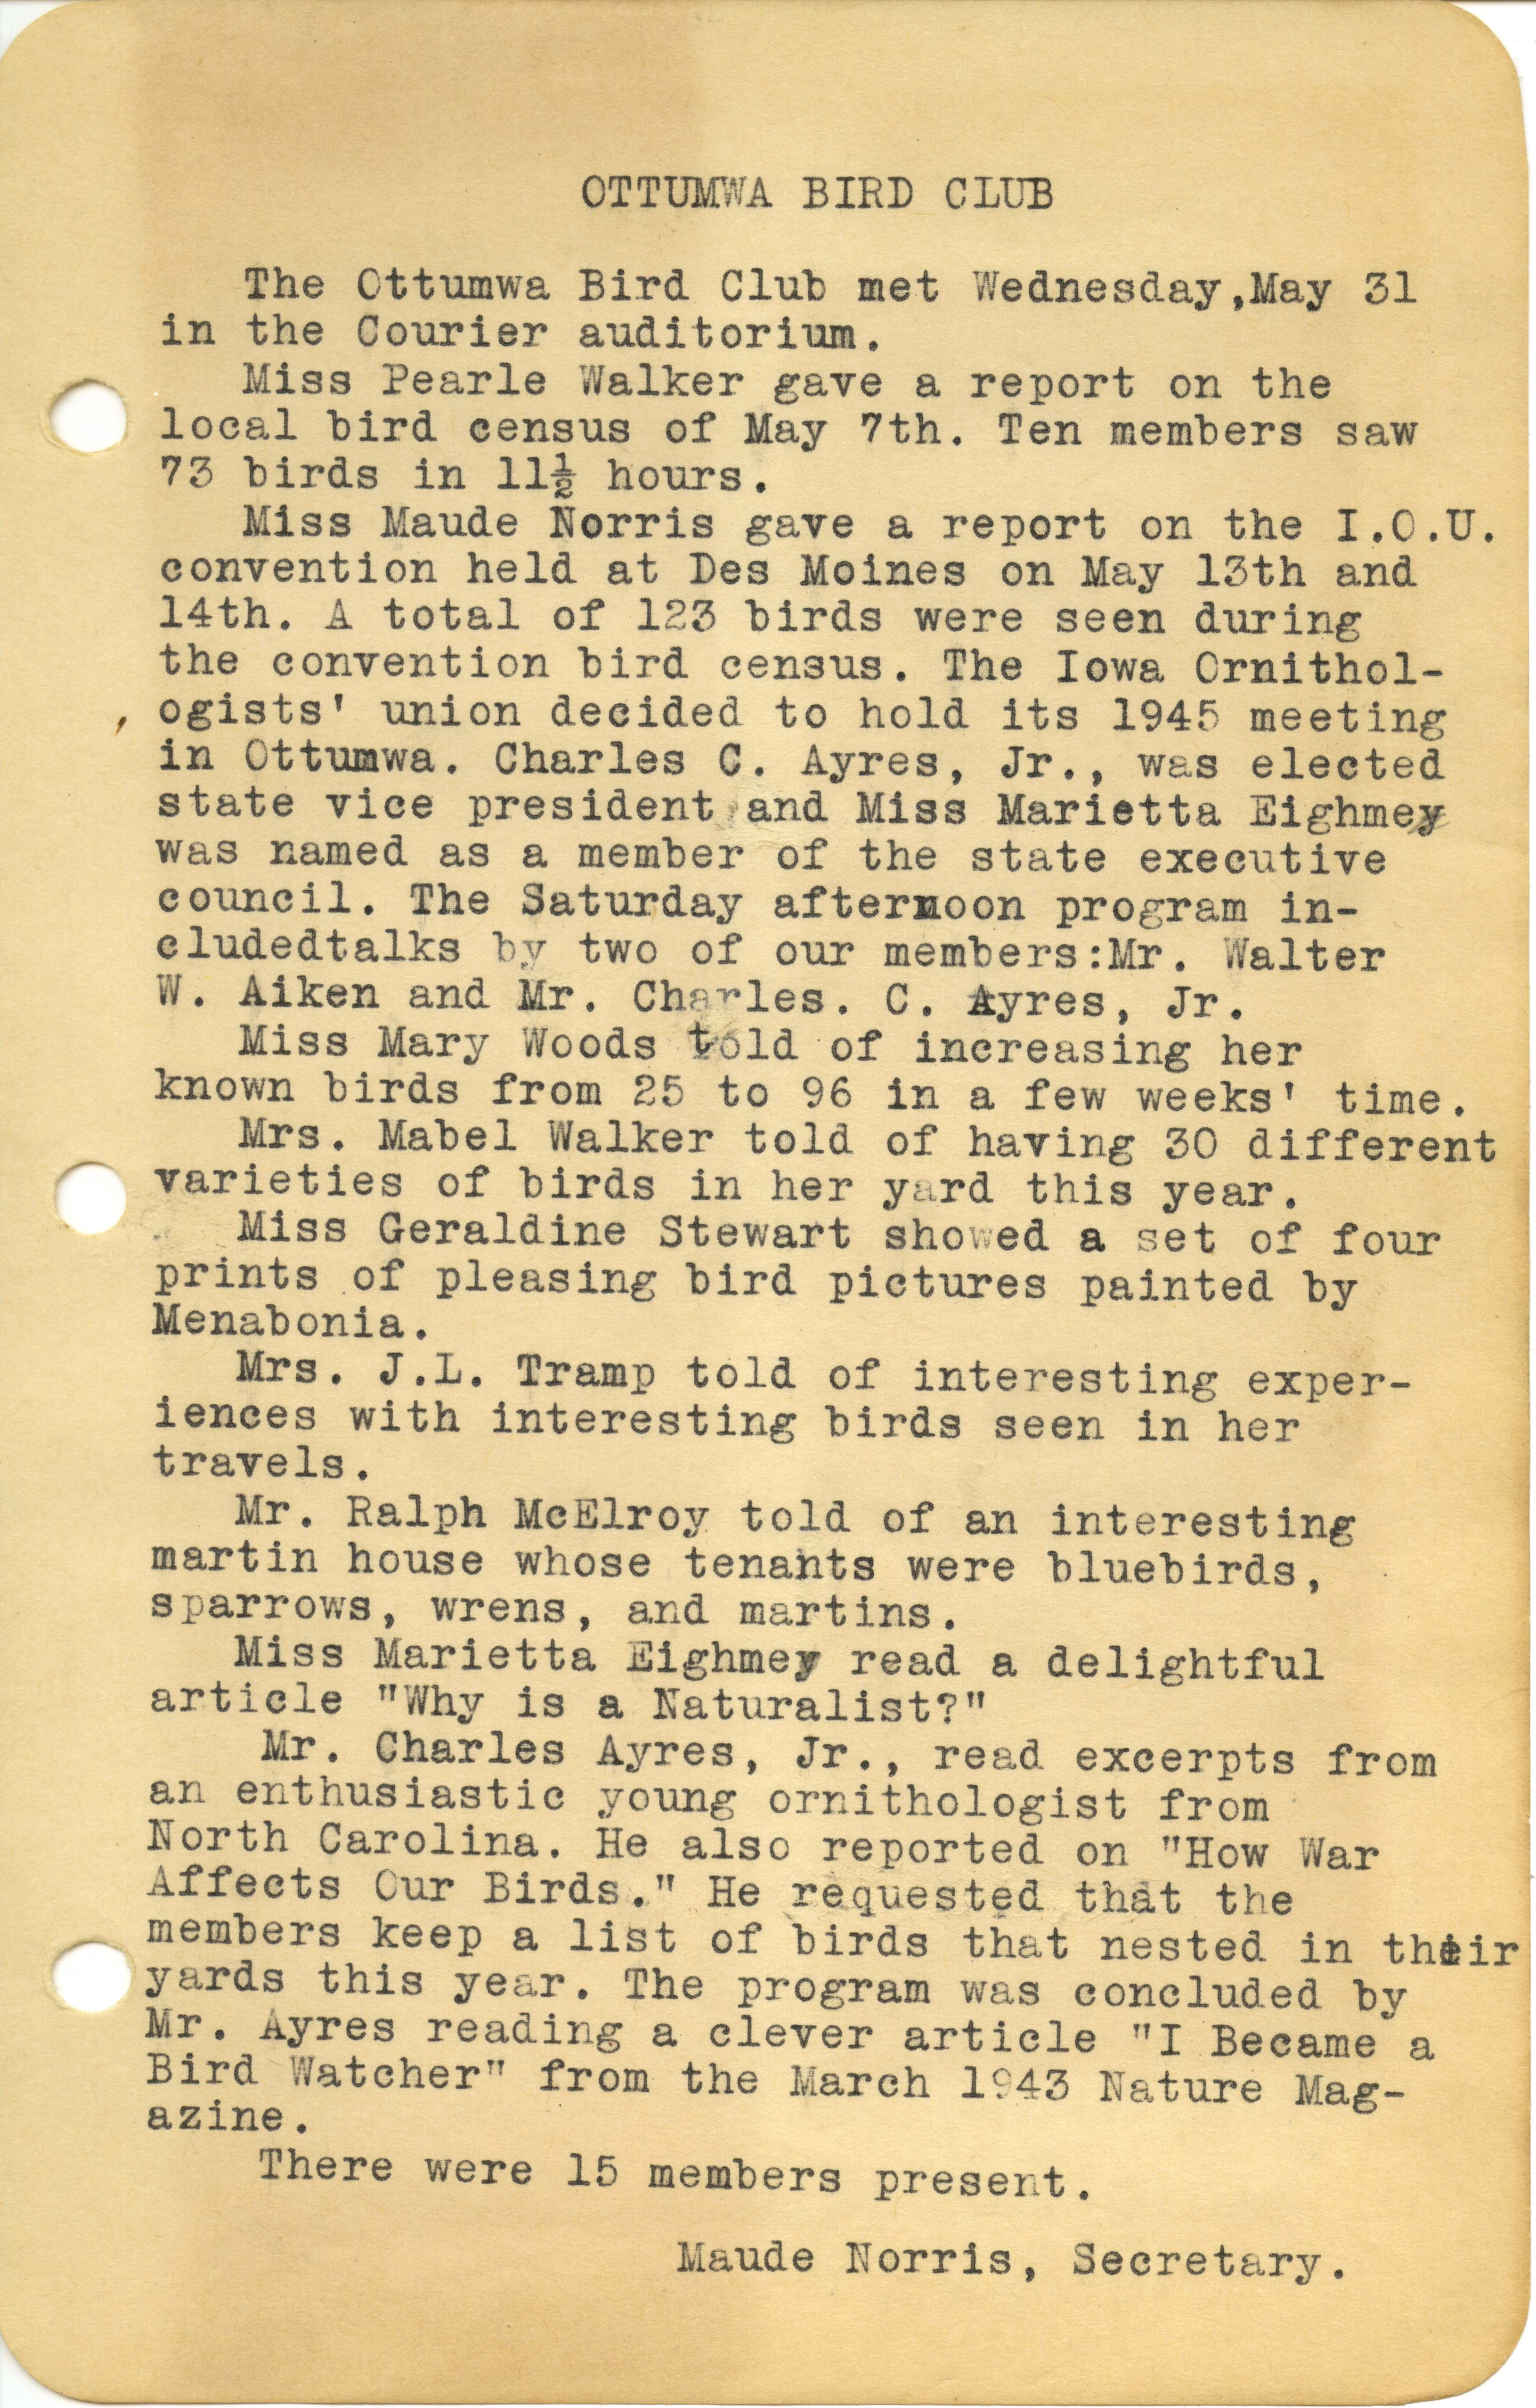 Ottumwa Bird Club meeting minutes, May 31, 1944